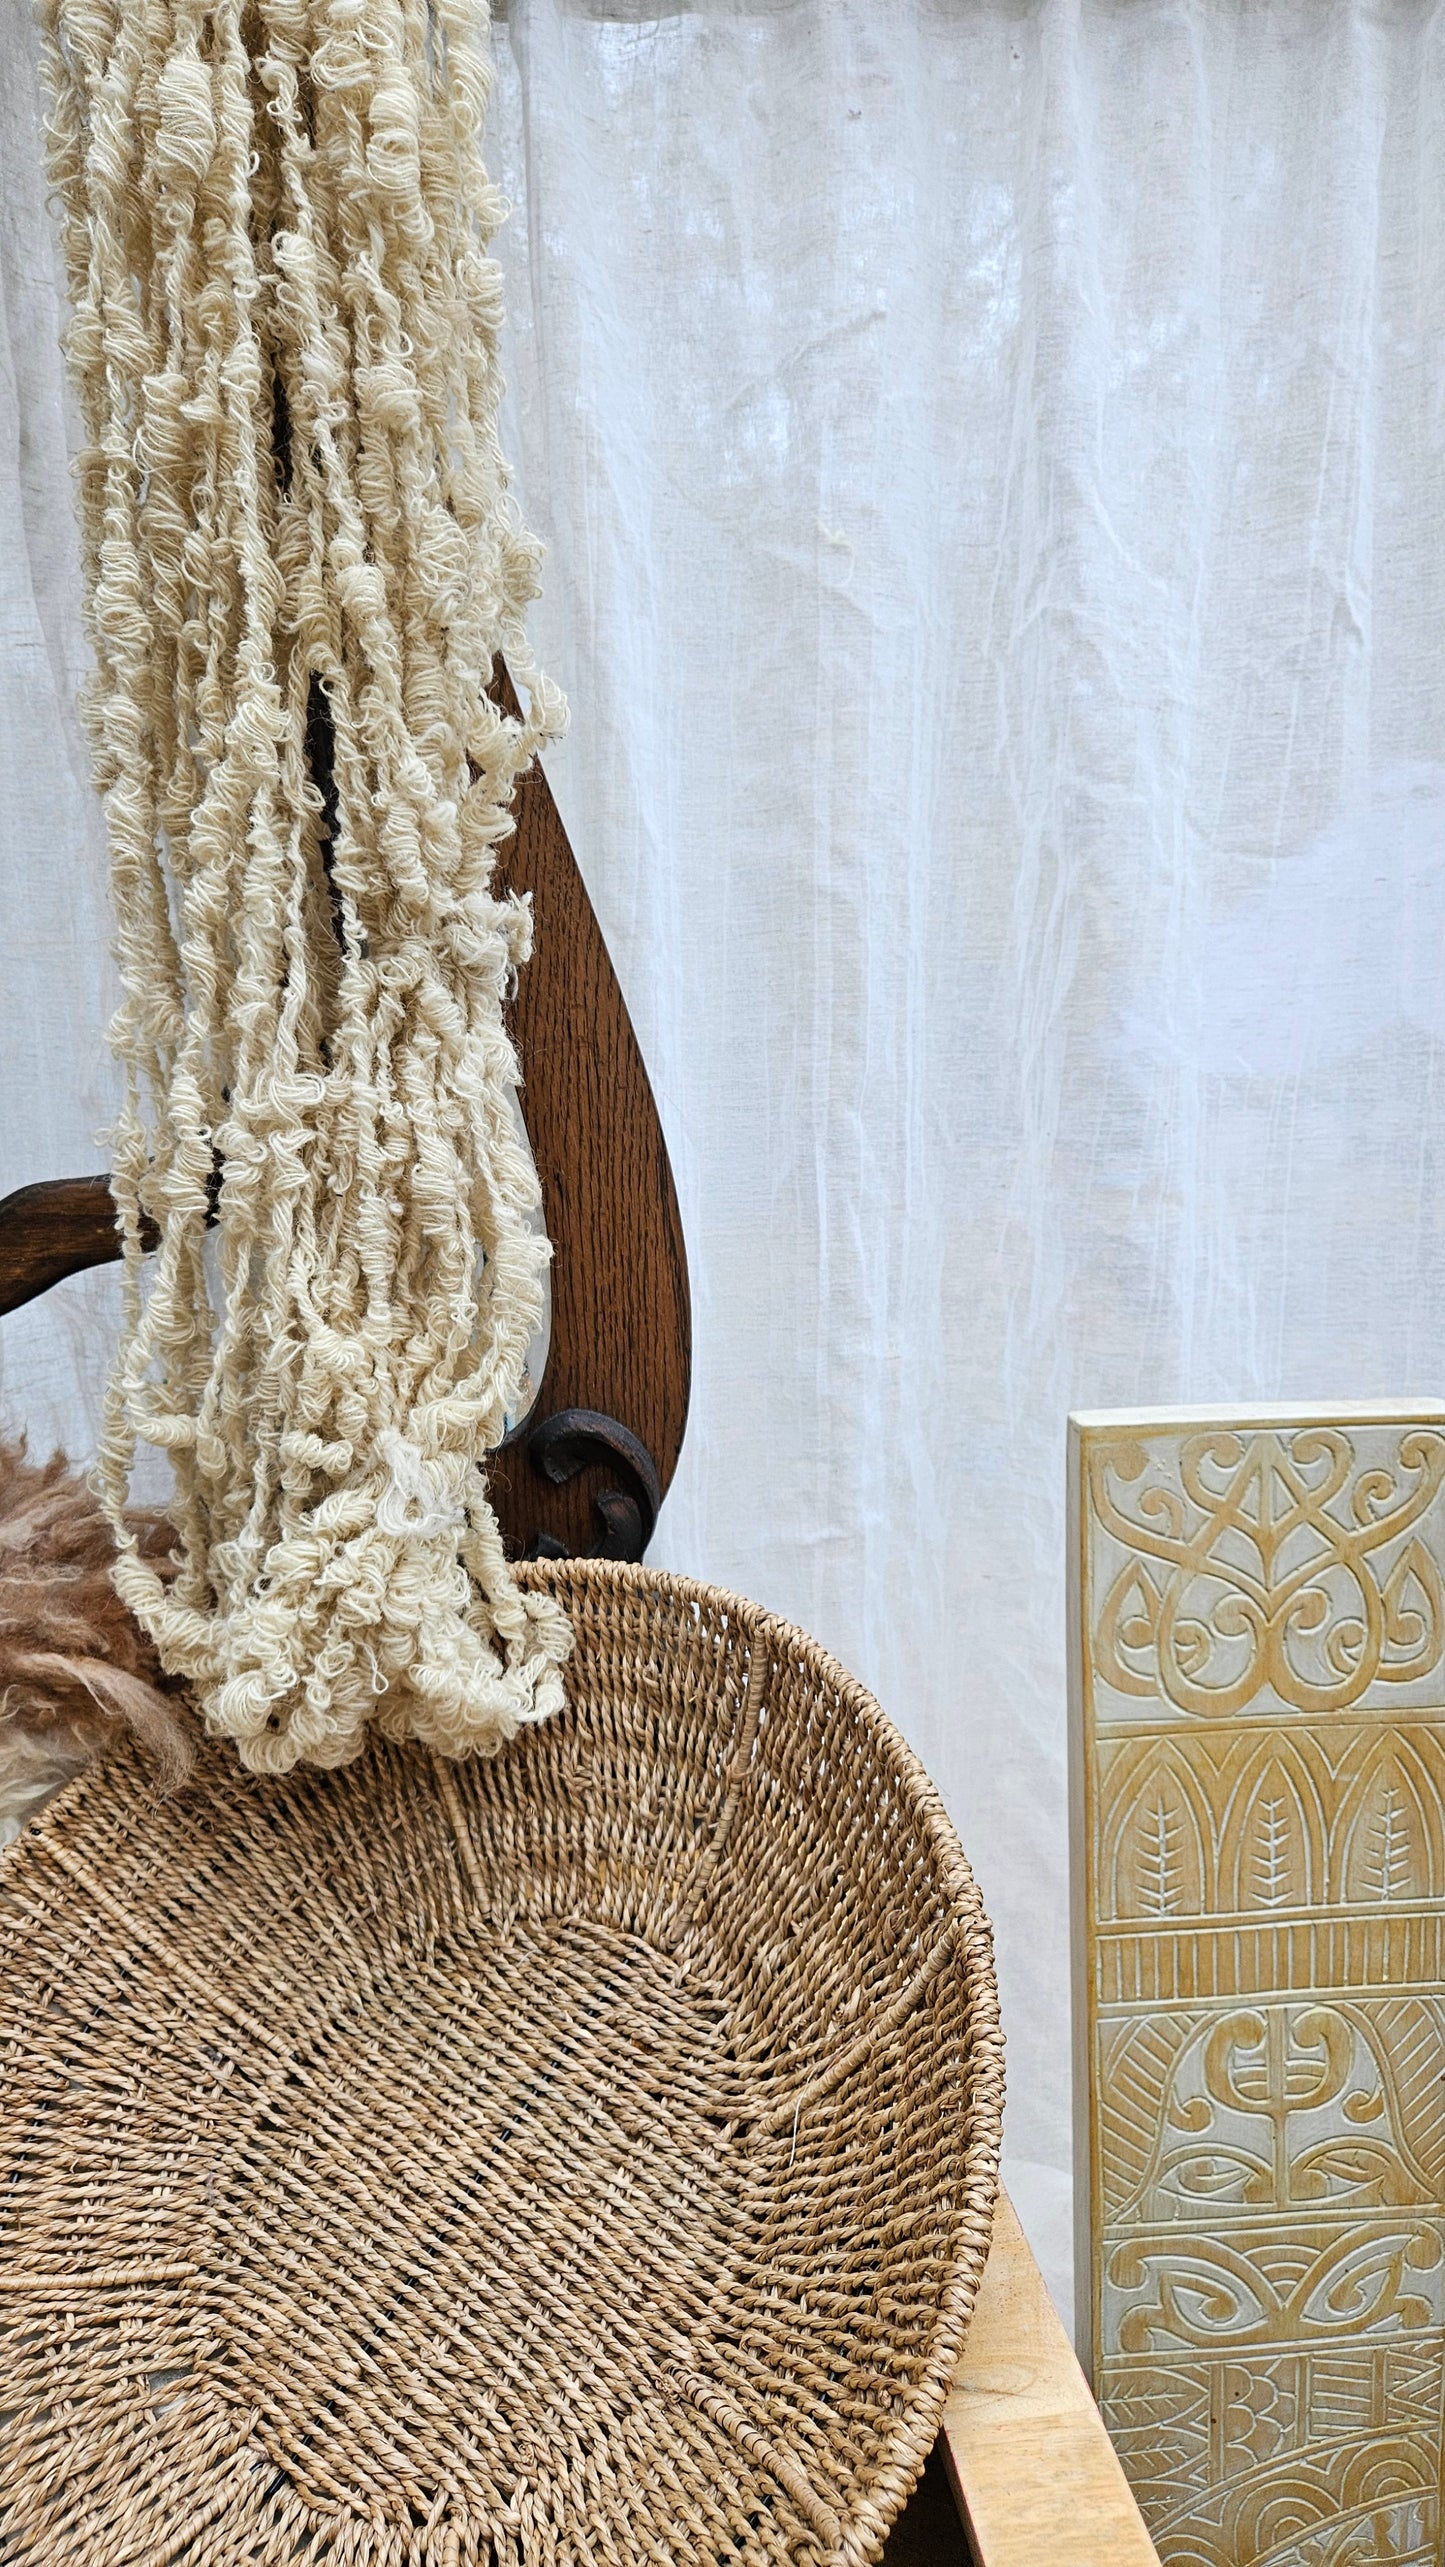 BLIZZARD OF 78 - Handspun Bulky Wool Textured Art Yarn - 50 Yards 5.3 oz